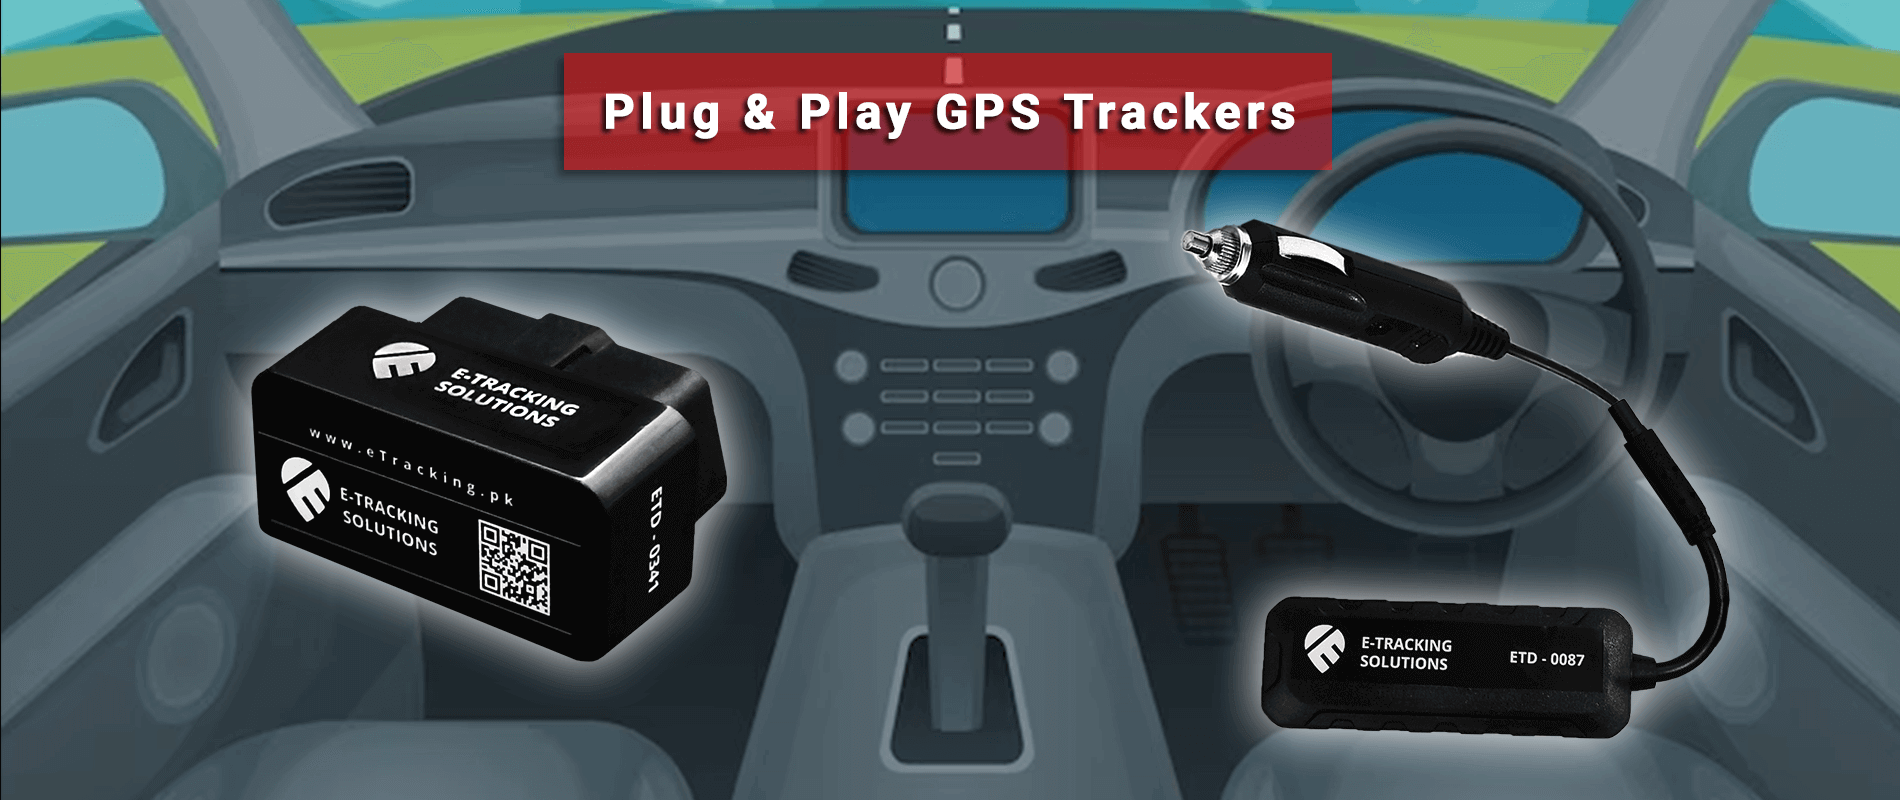 Plug & Play GPS Trackers